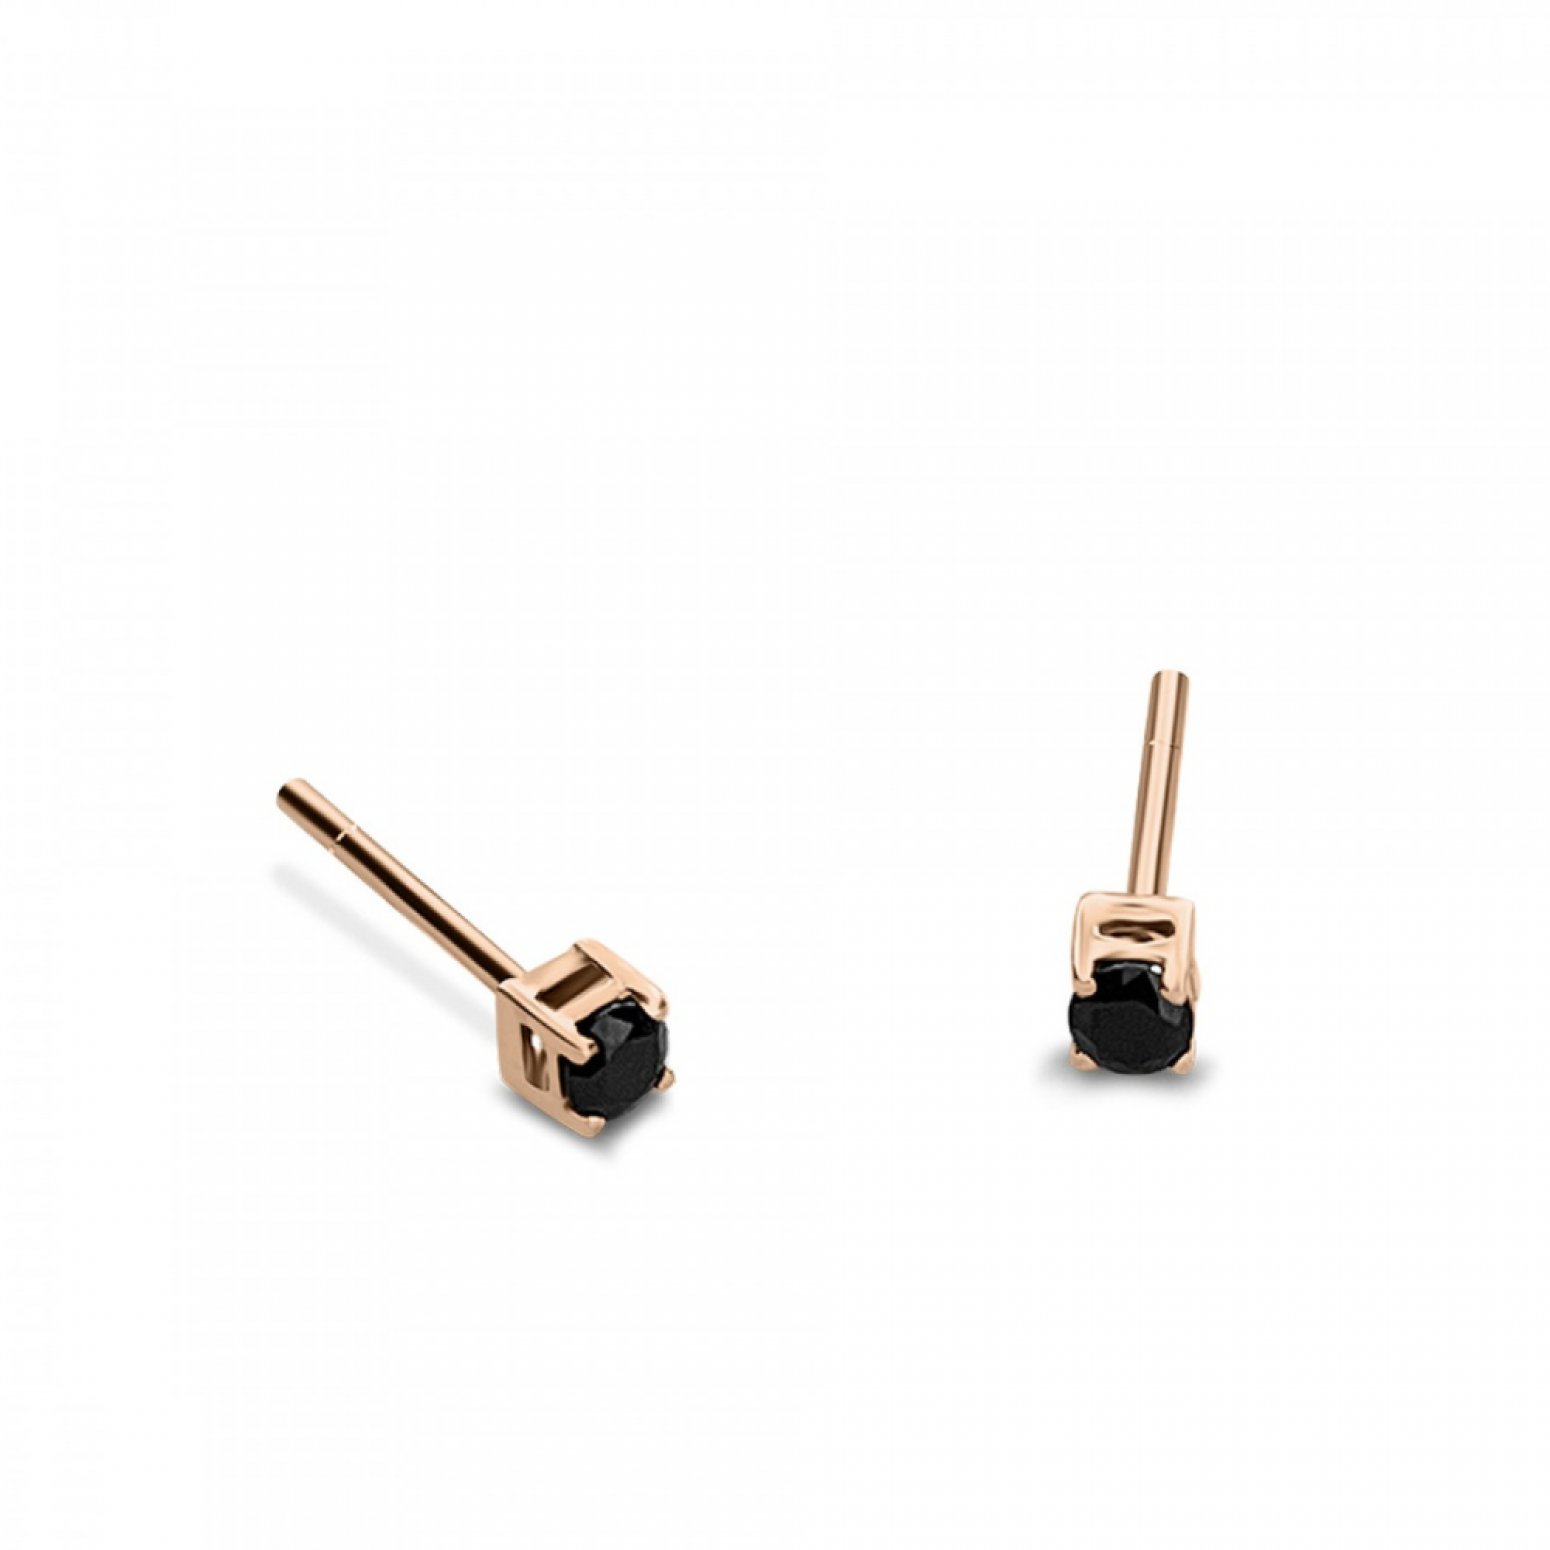 Solitaire earrings 9K pink gold with black zircon, sk3501 EARRINGS Κοσμηματα - chrilia.gr